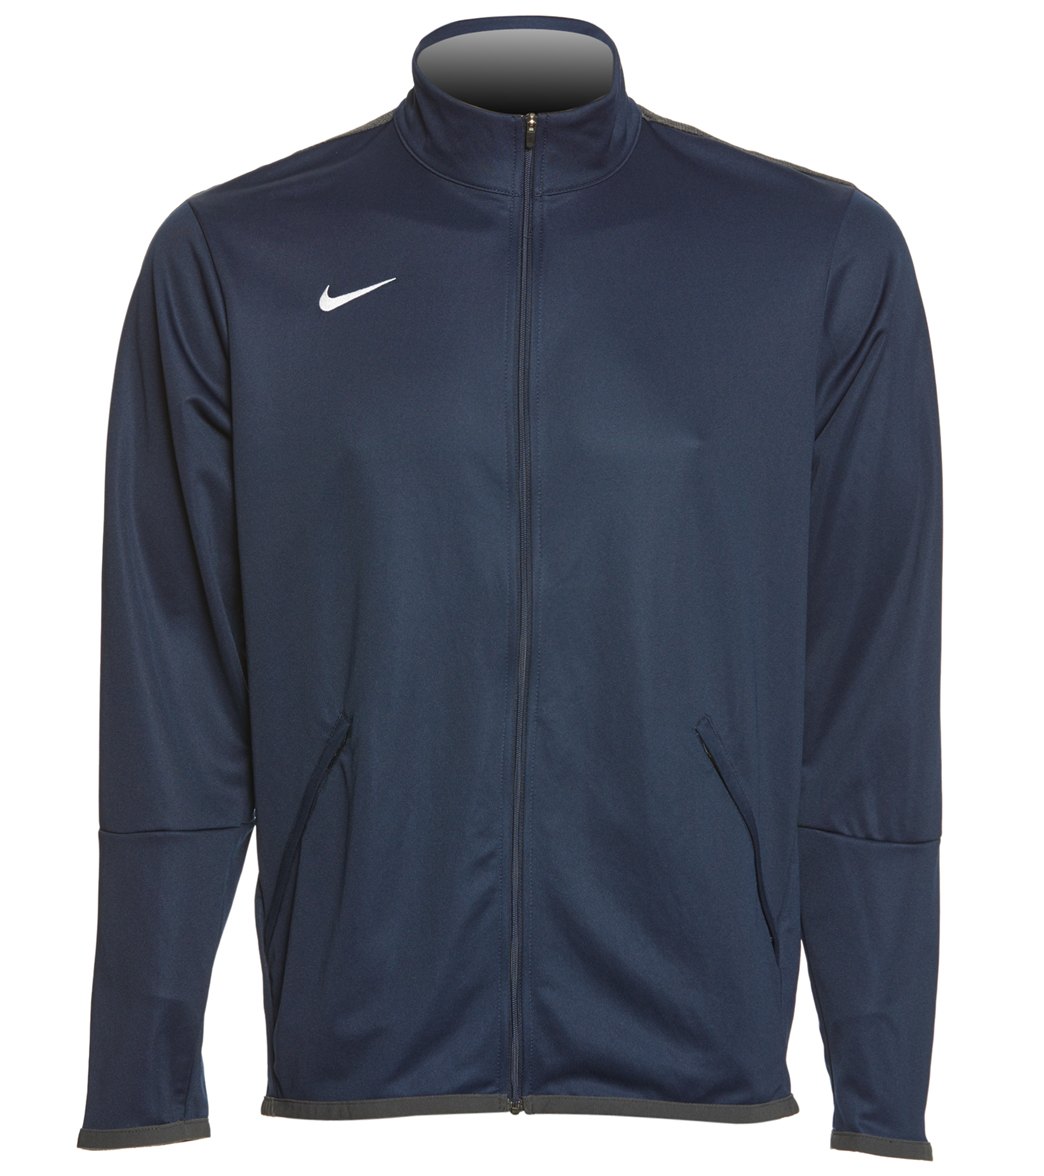 Nike Men's Training Jacket - Navy Xl Size Xl Polyester - Swimoutlet.com